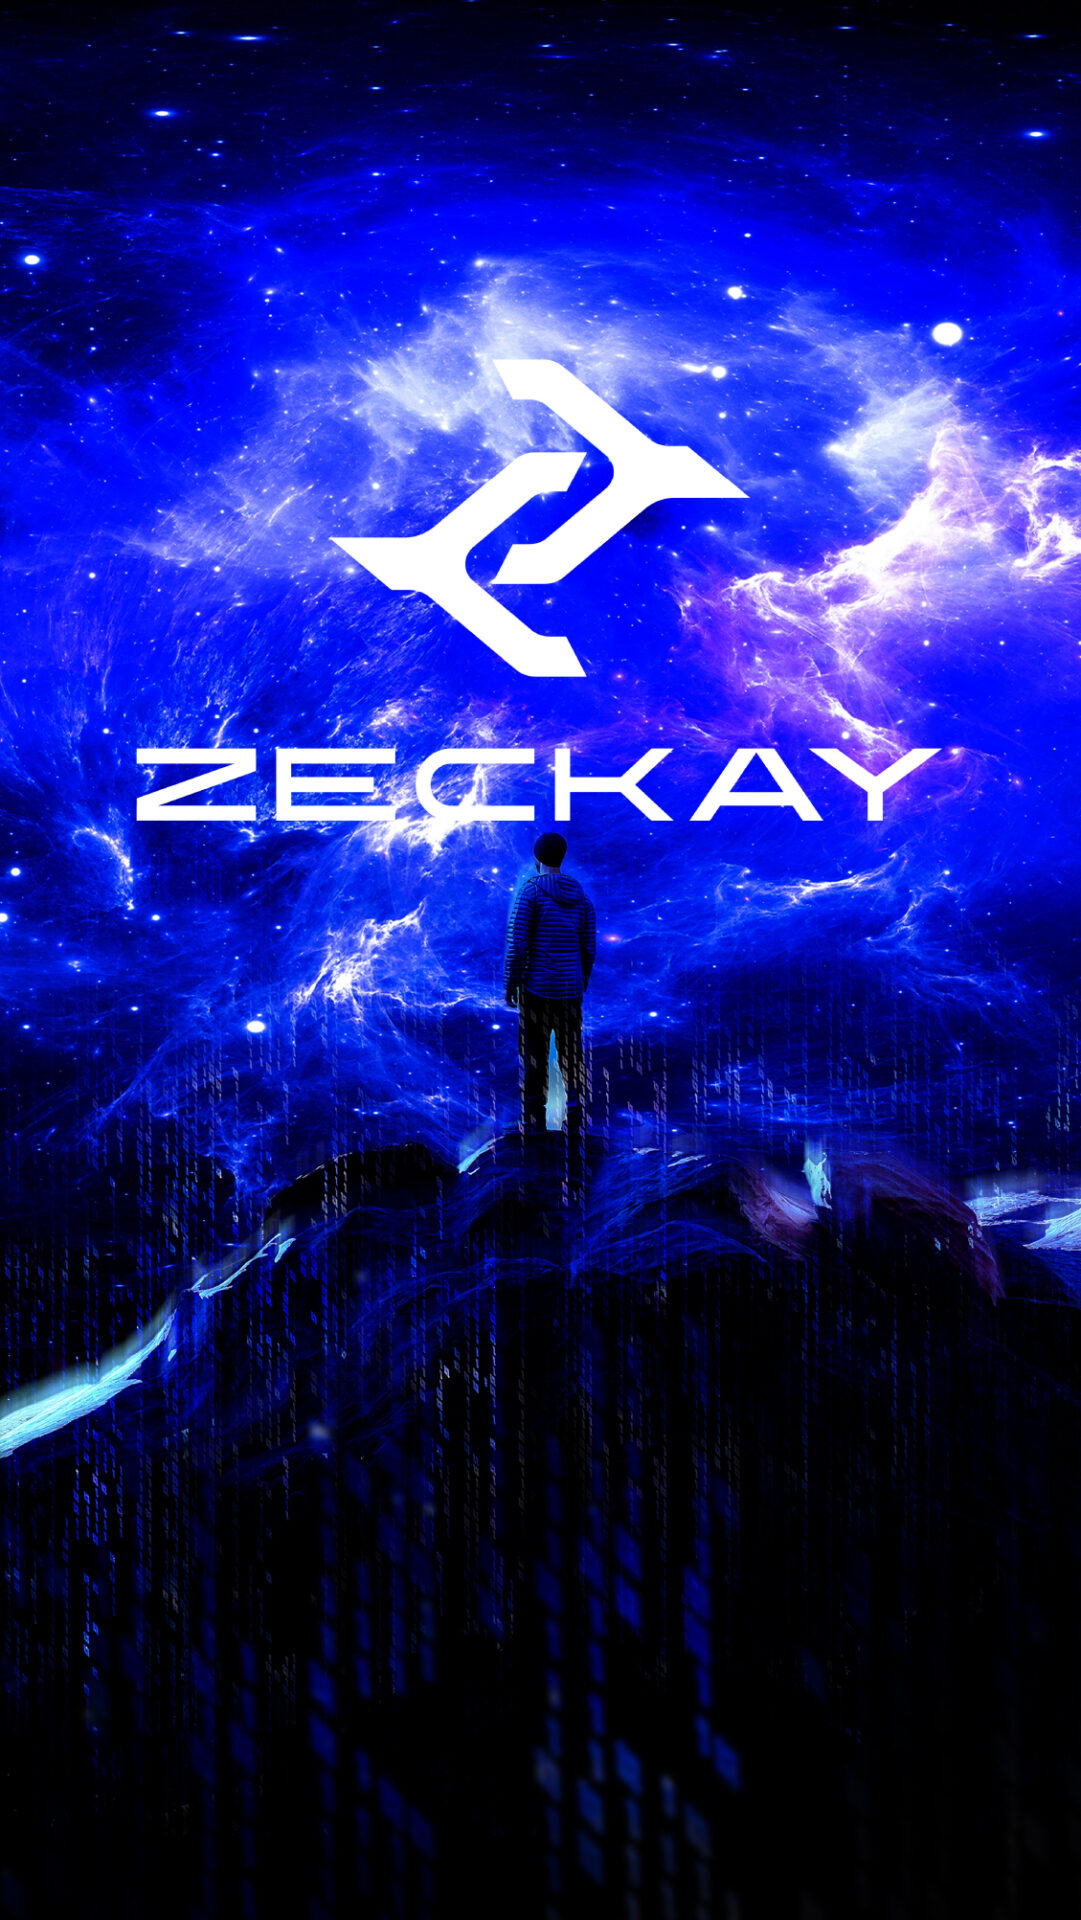 「ZECKAY」のサムネイル画像